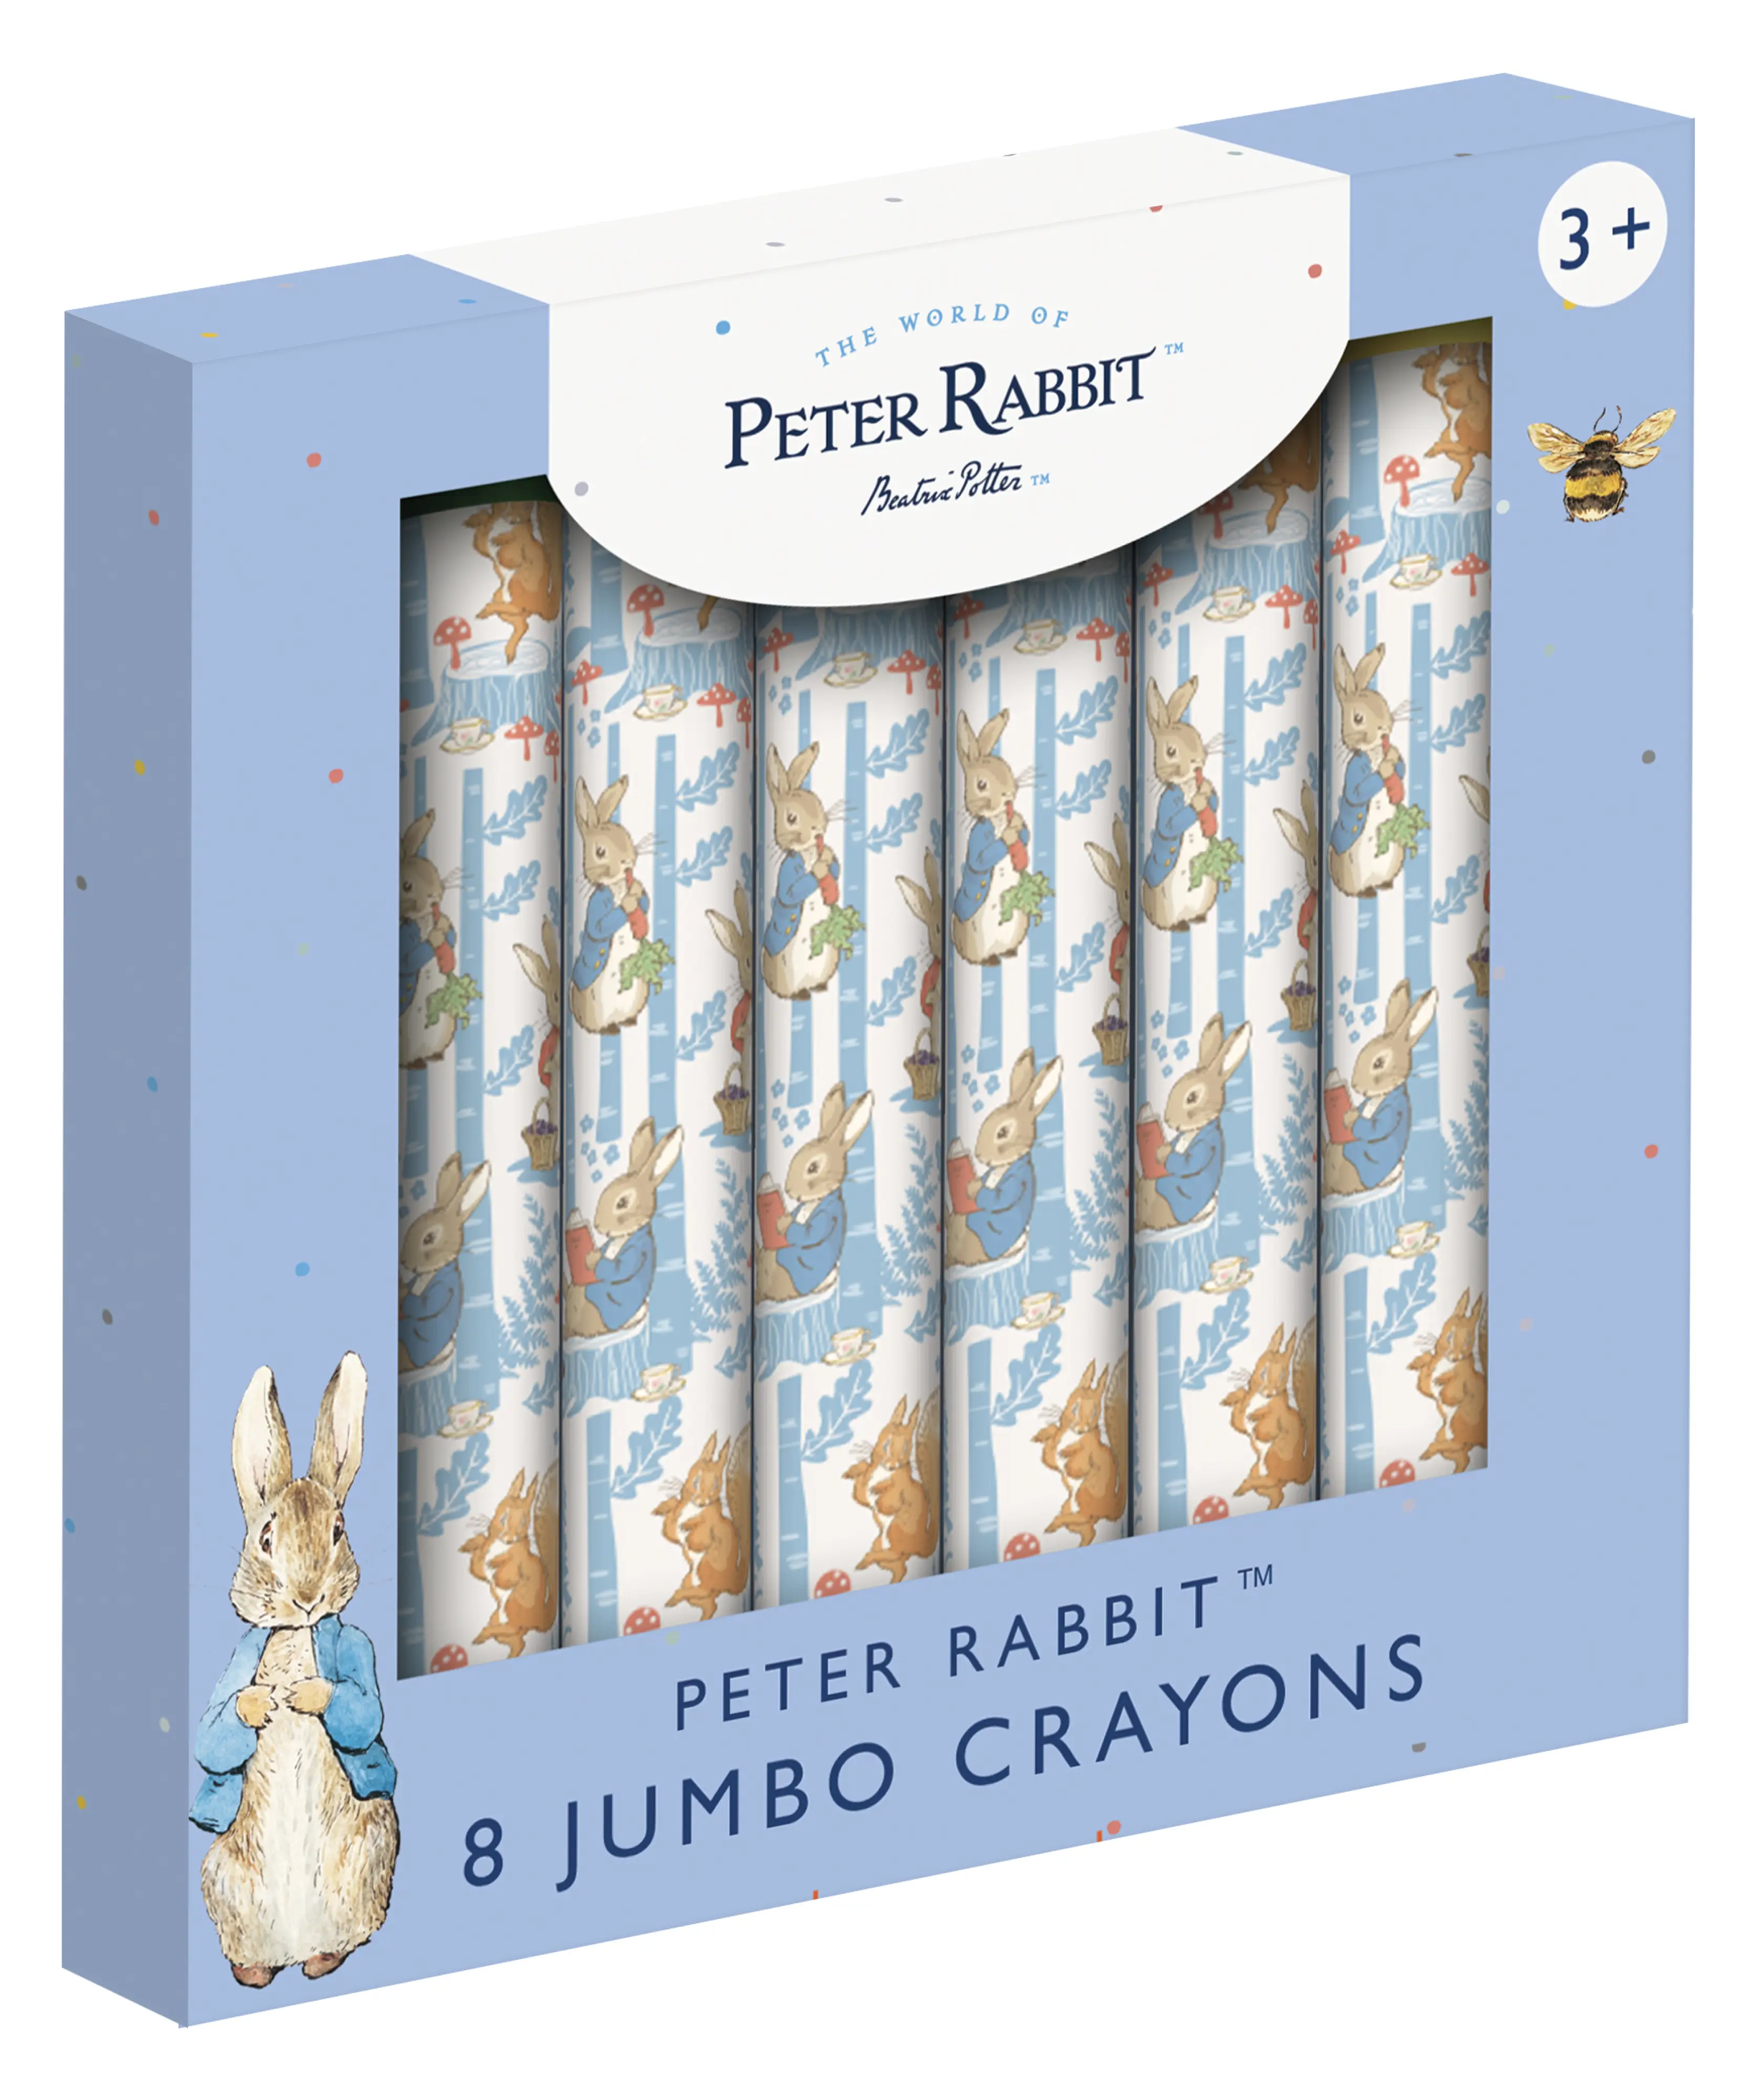 Peter Rabbit 8 Jumbo Crayons Forest Picnic